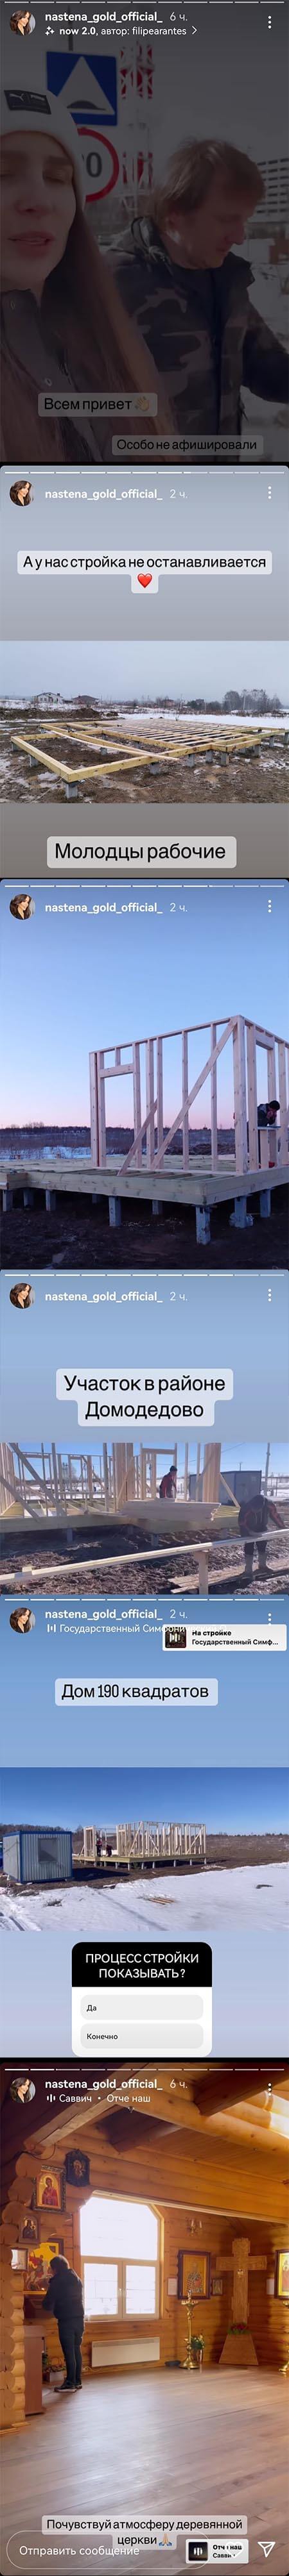 Пост Анастасии Голд вконтакте